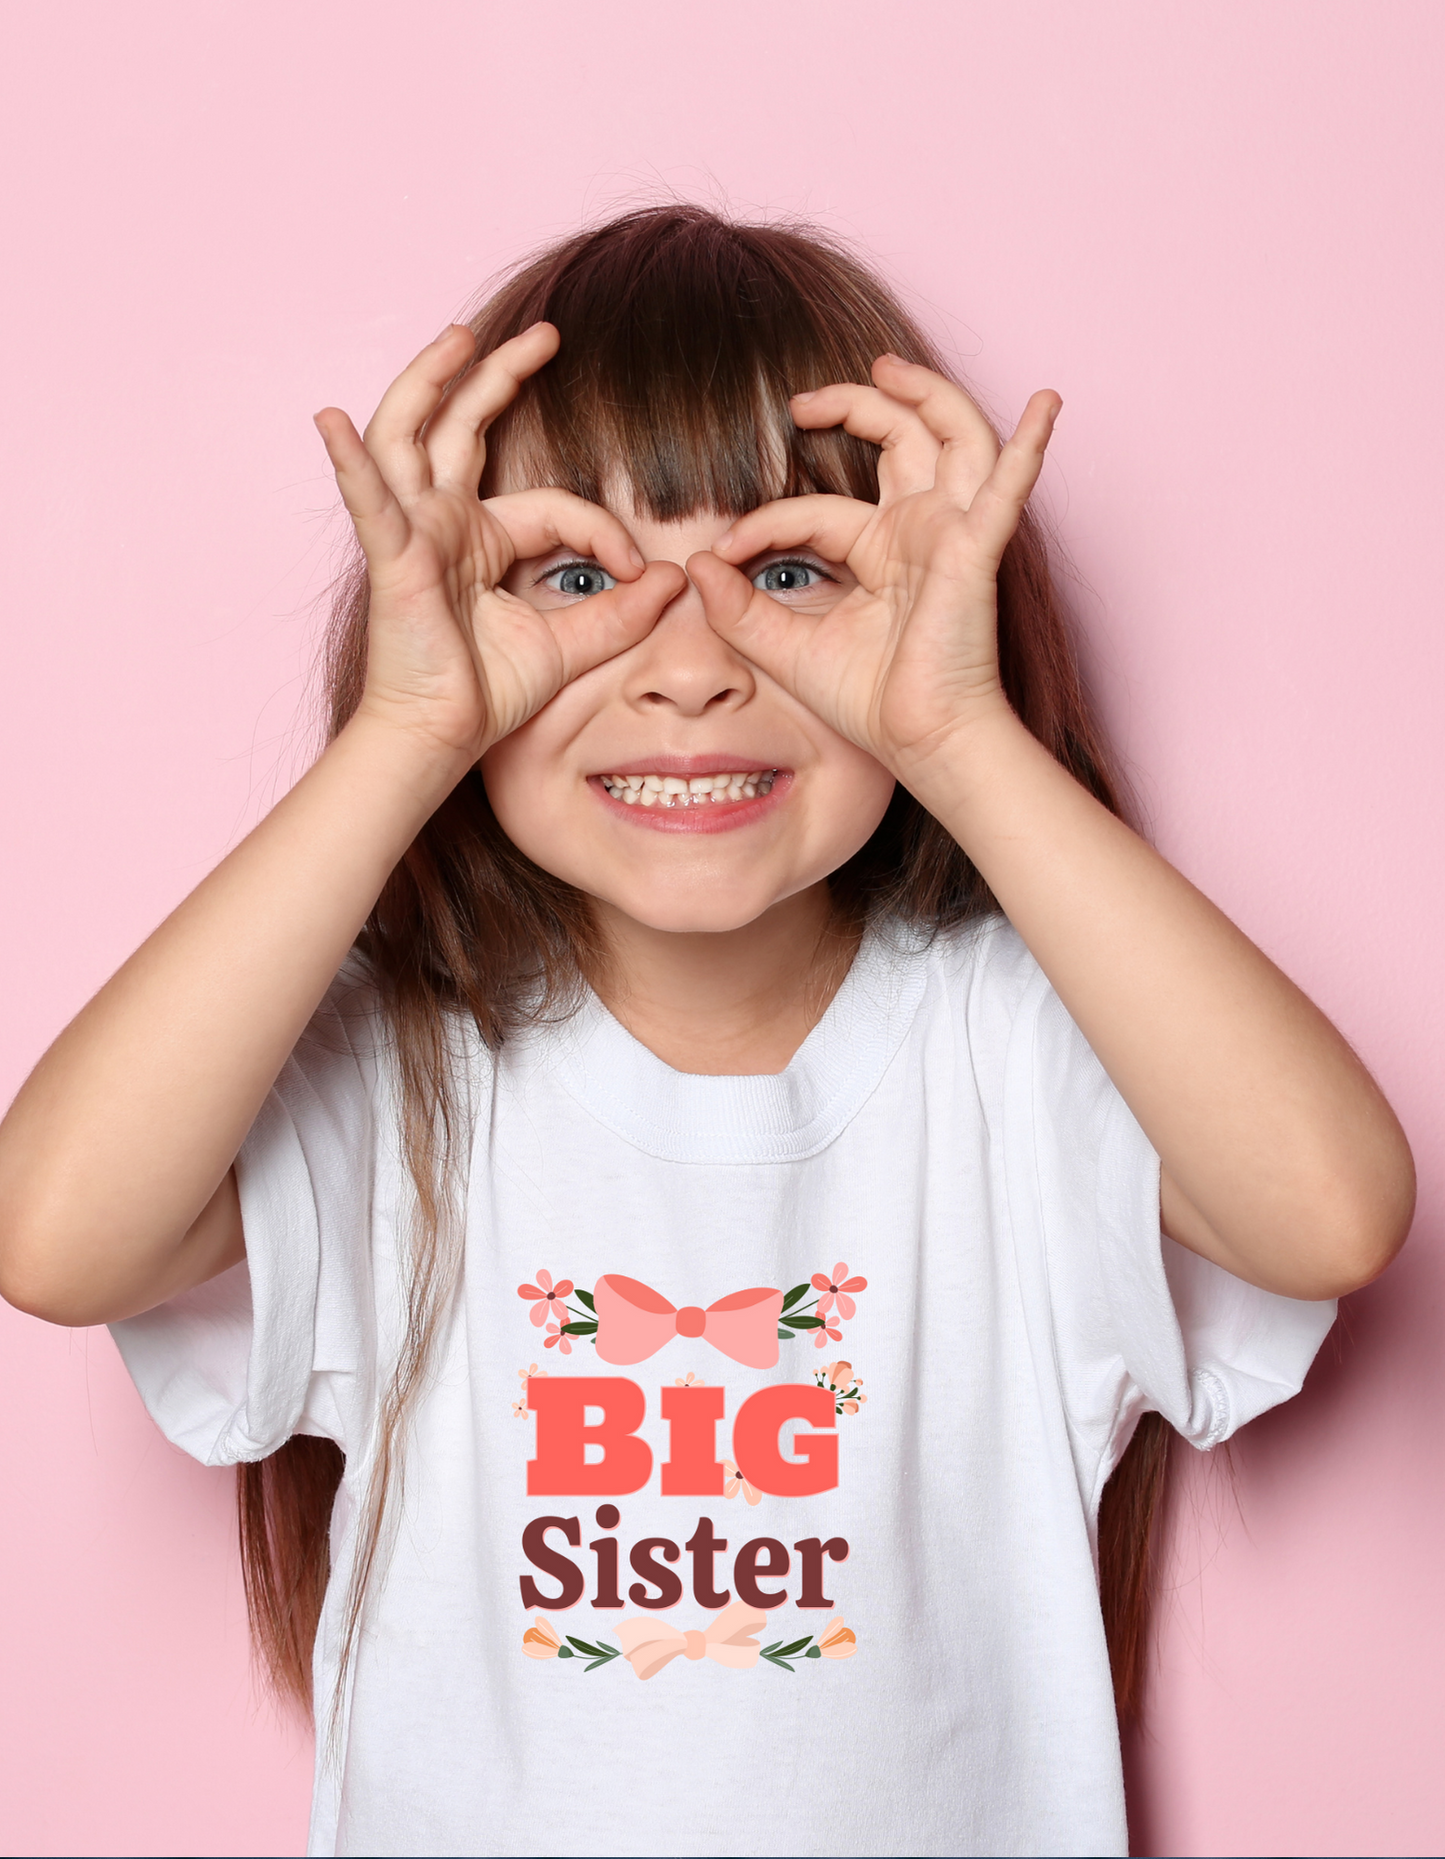 Big Sister Kids T-Shirt